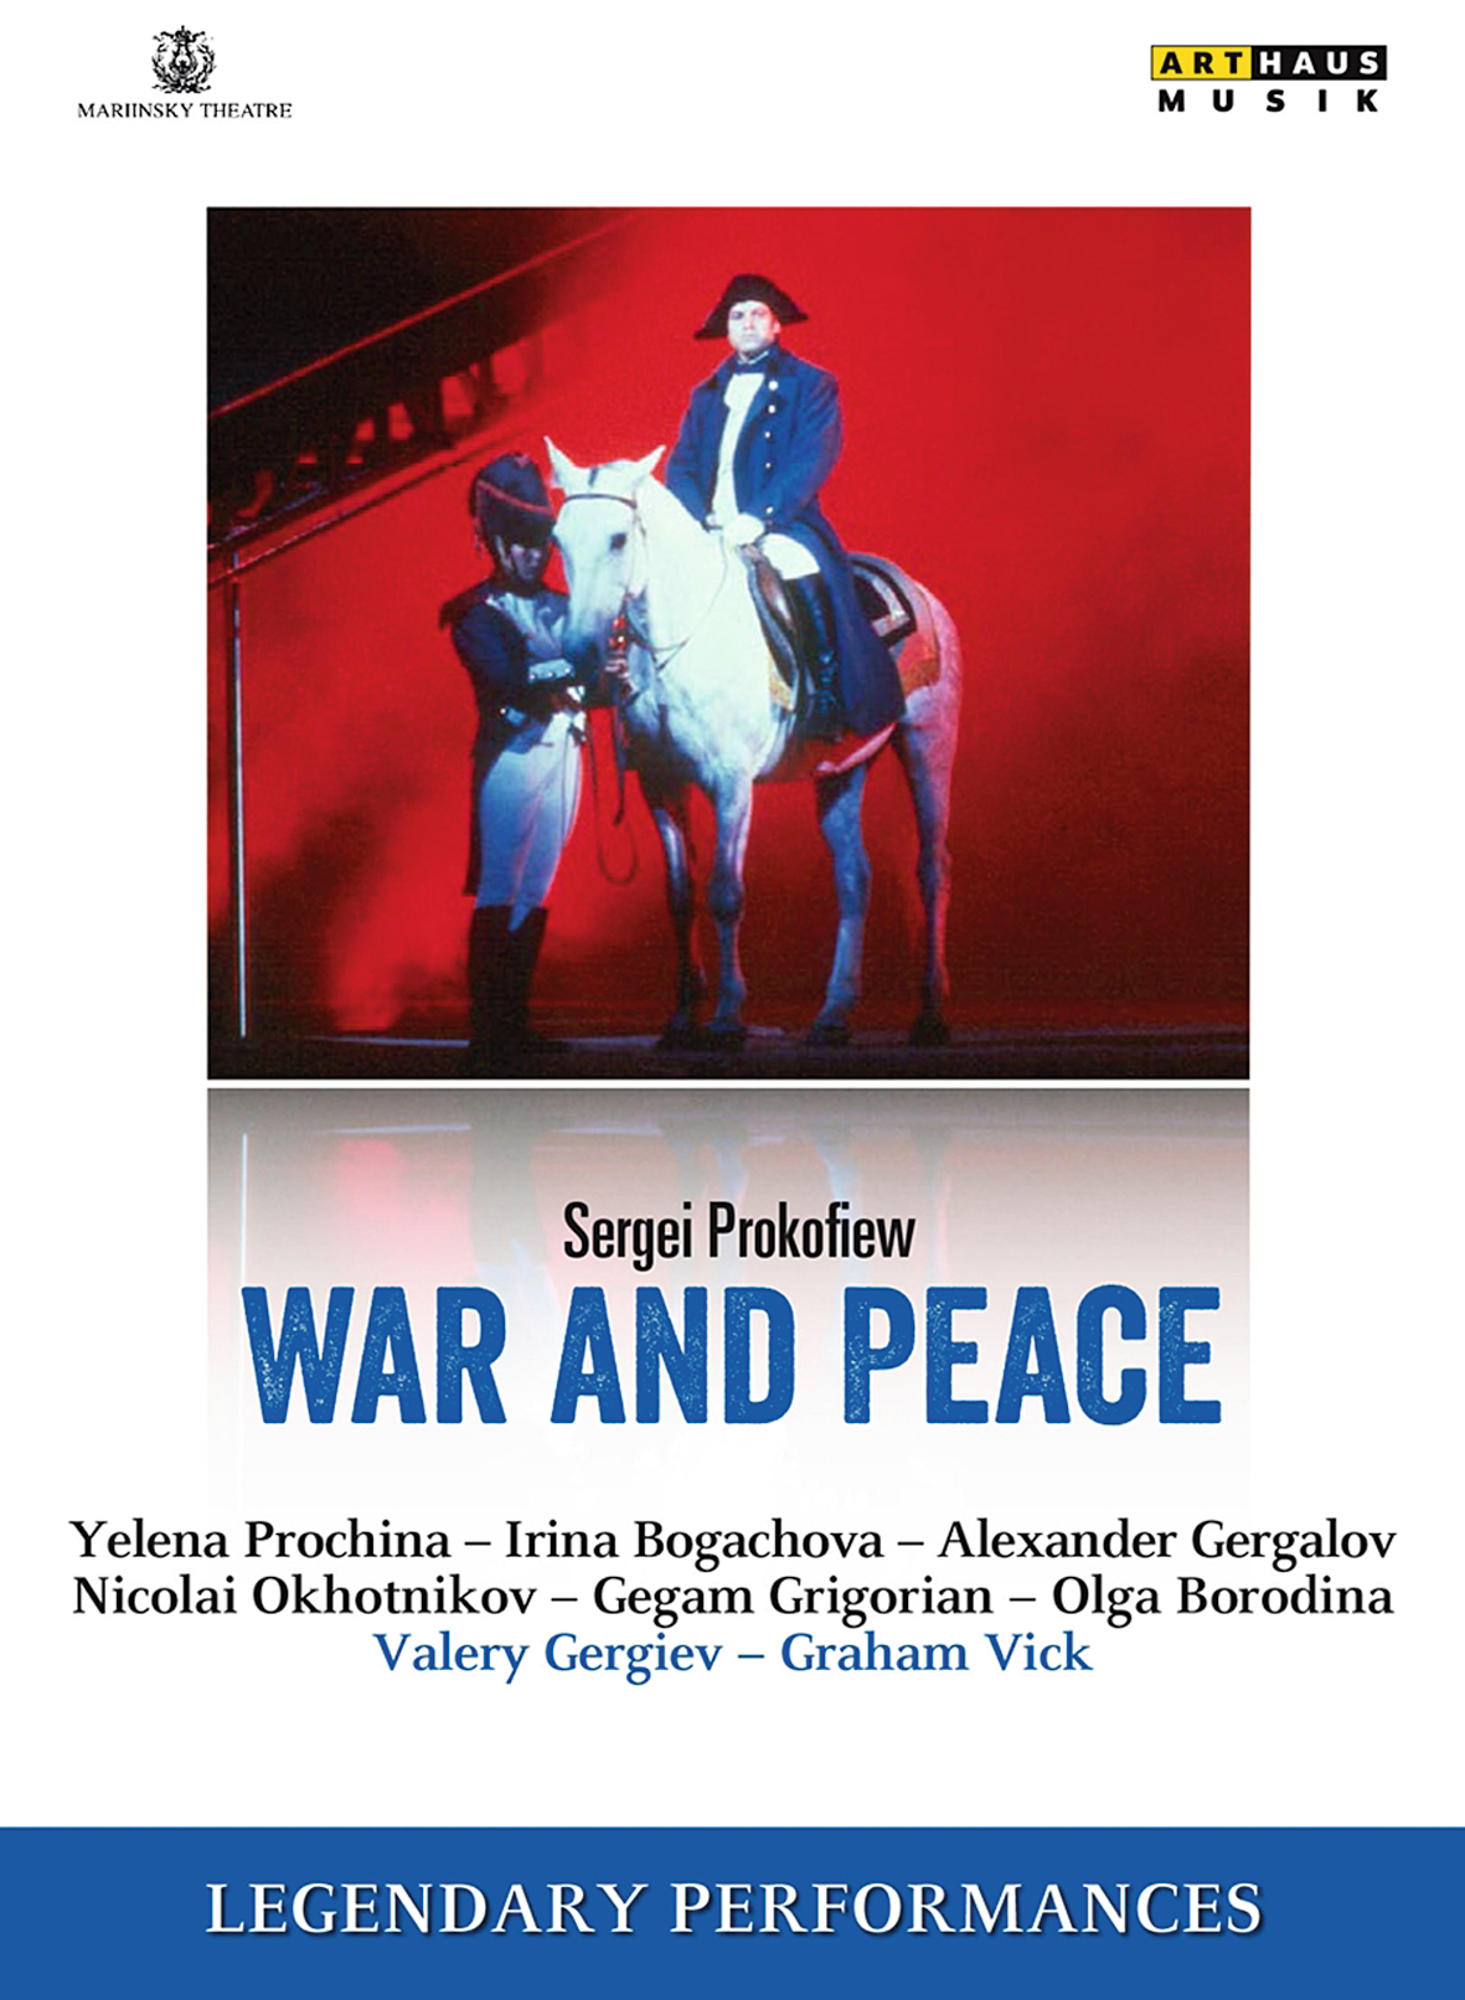 Alexander Gergalov, Borodina, Olga Gegam - Orchestra Frieden Kirov Und Prokina, Elena Grigorian, (DVD) Vassily - Gerelo, Krieg